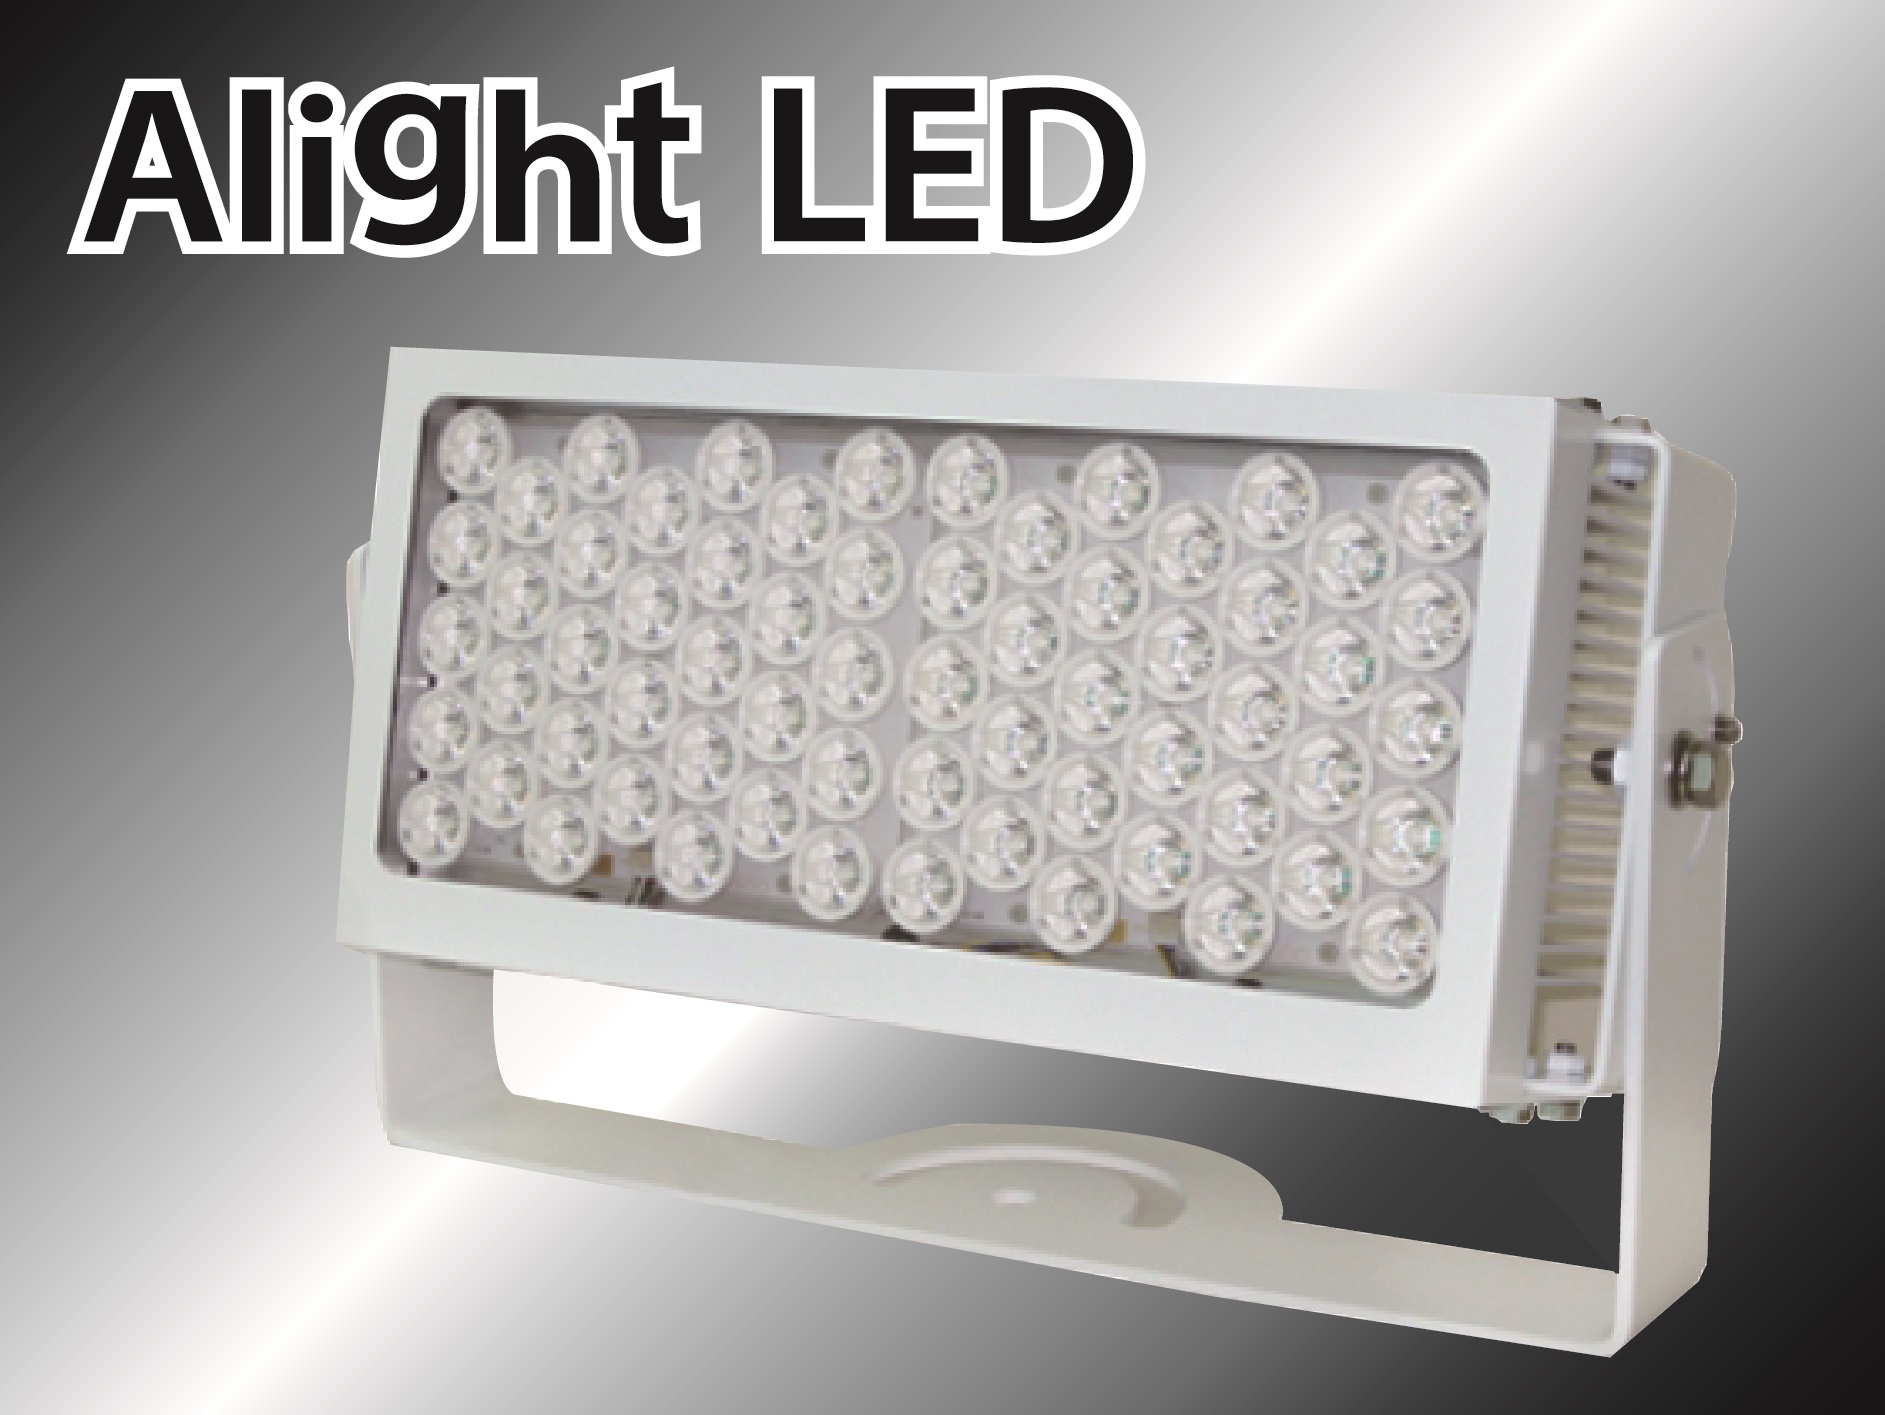 LED  Alight  